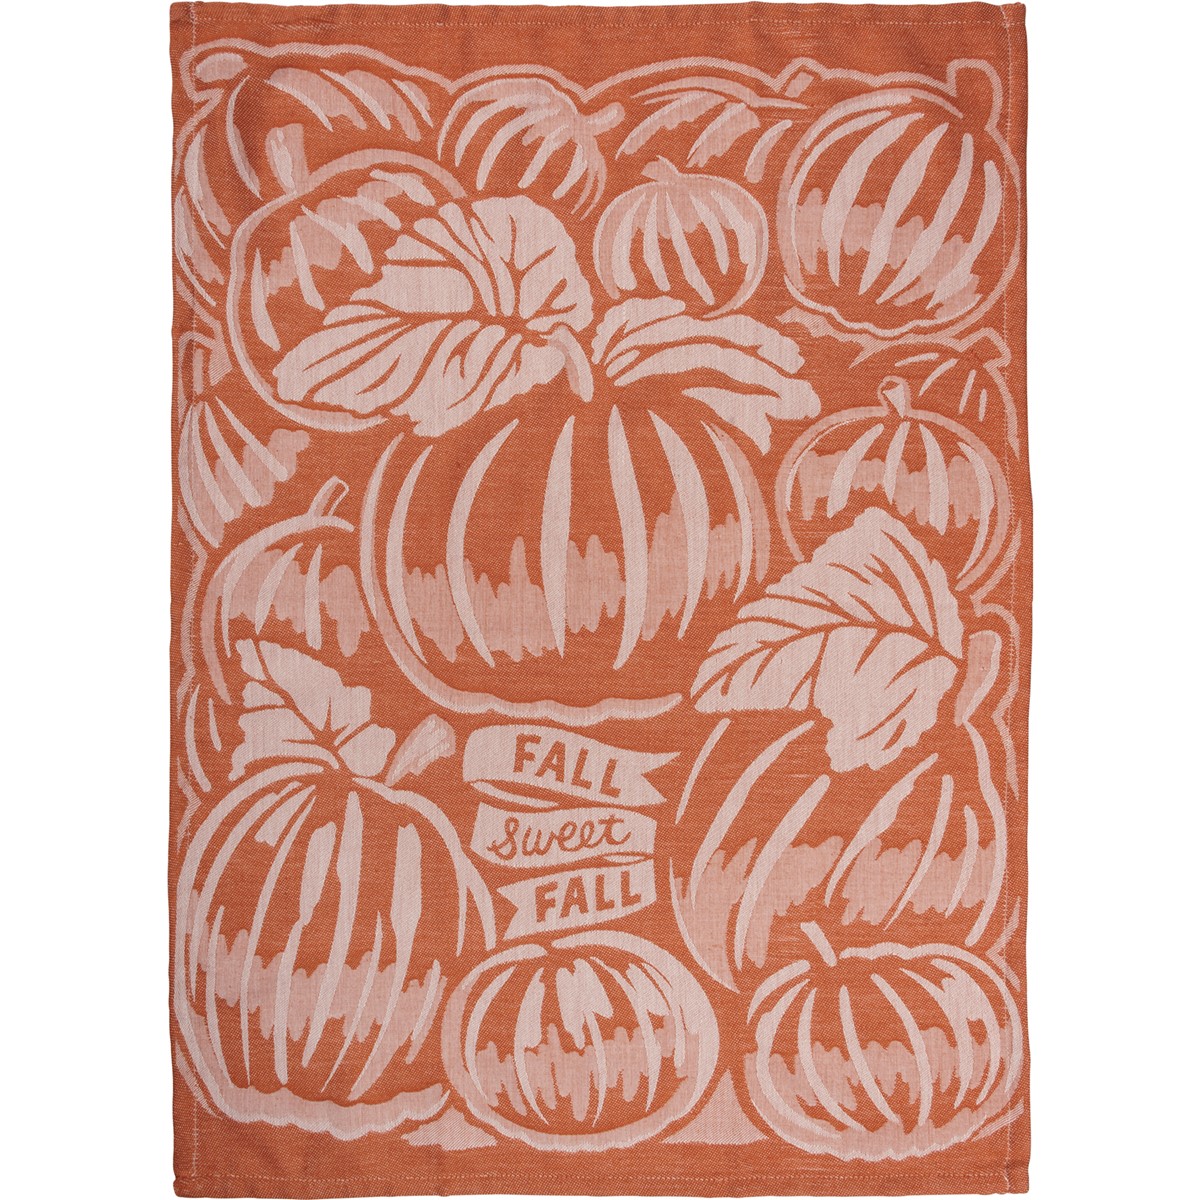 Fall Sweet Fall Pumpkins Kitchen Towel - Cotton